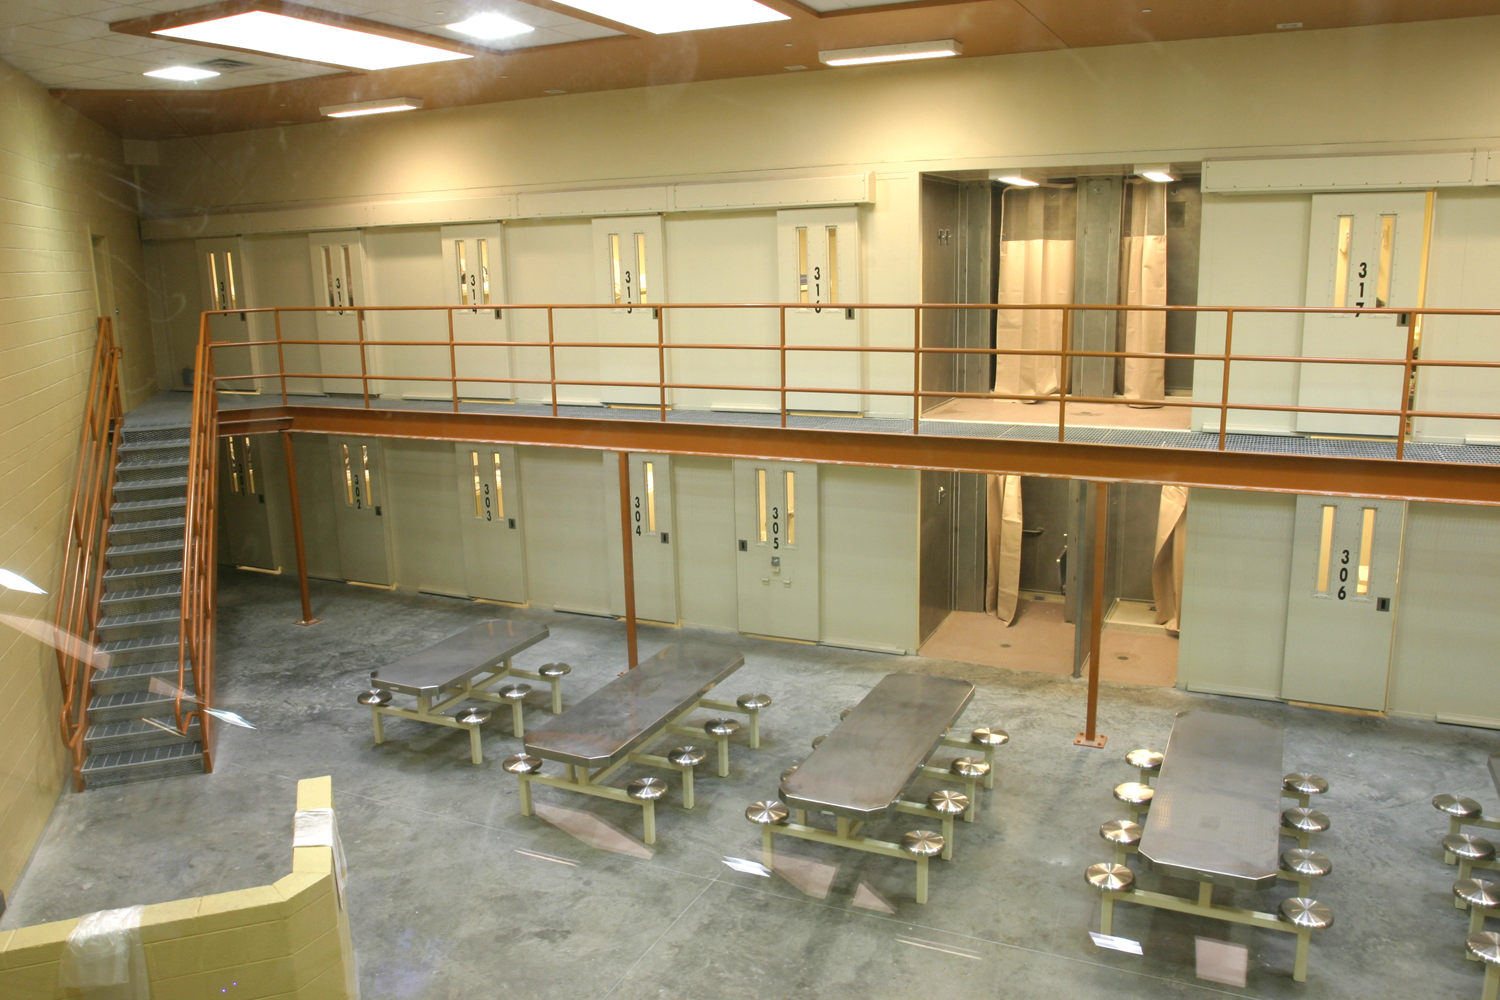 Bibb County Jail in Inmate Search, Mugshots, Visitation